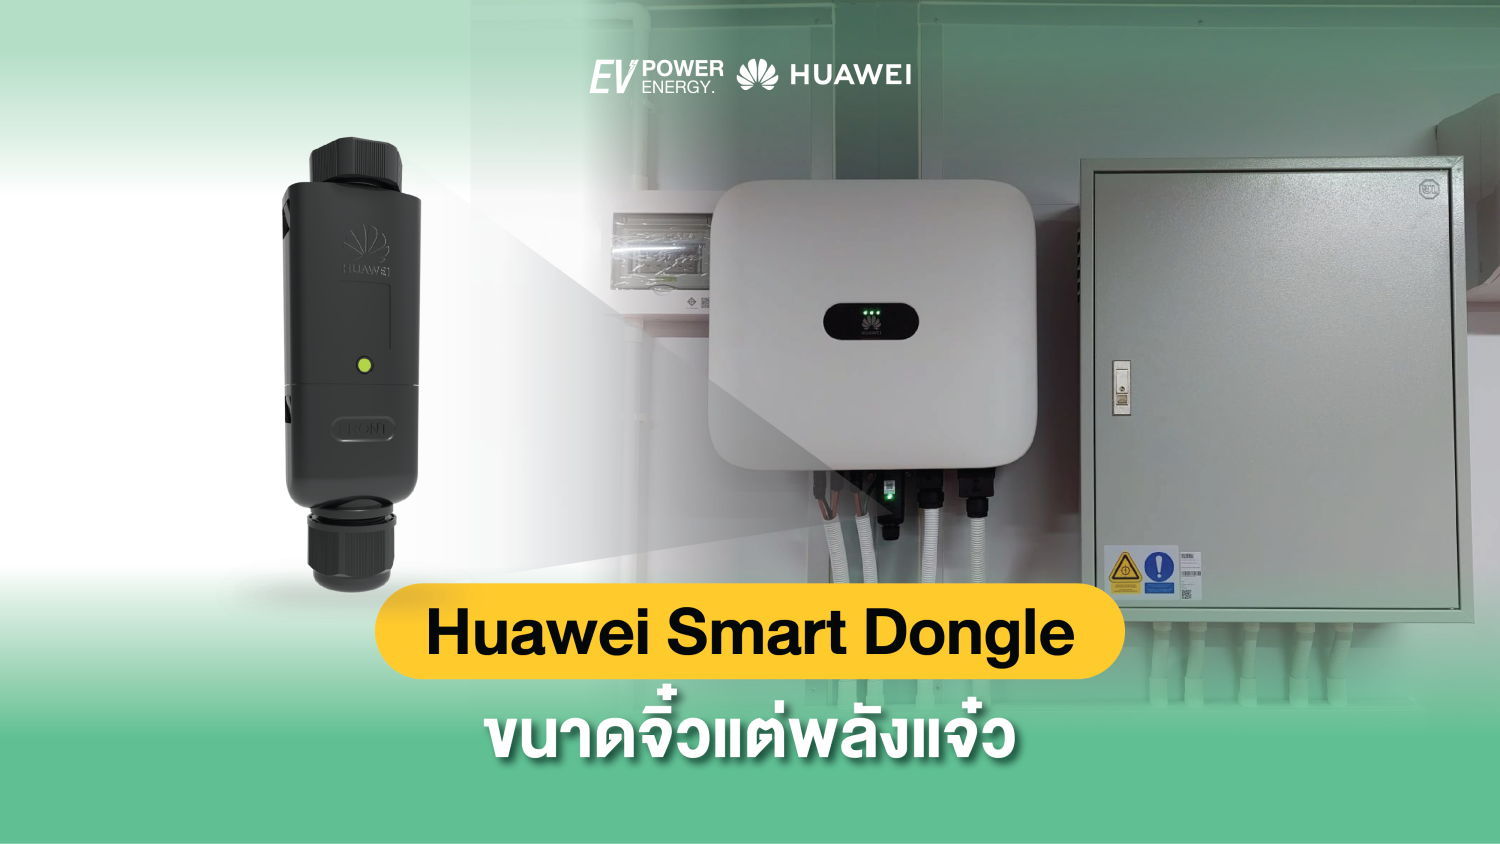 Huawei Smart Dongle ขนาดจิ๋วแต่พลังแจ๋ว 1